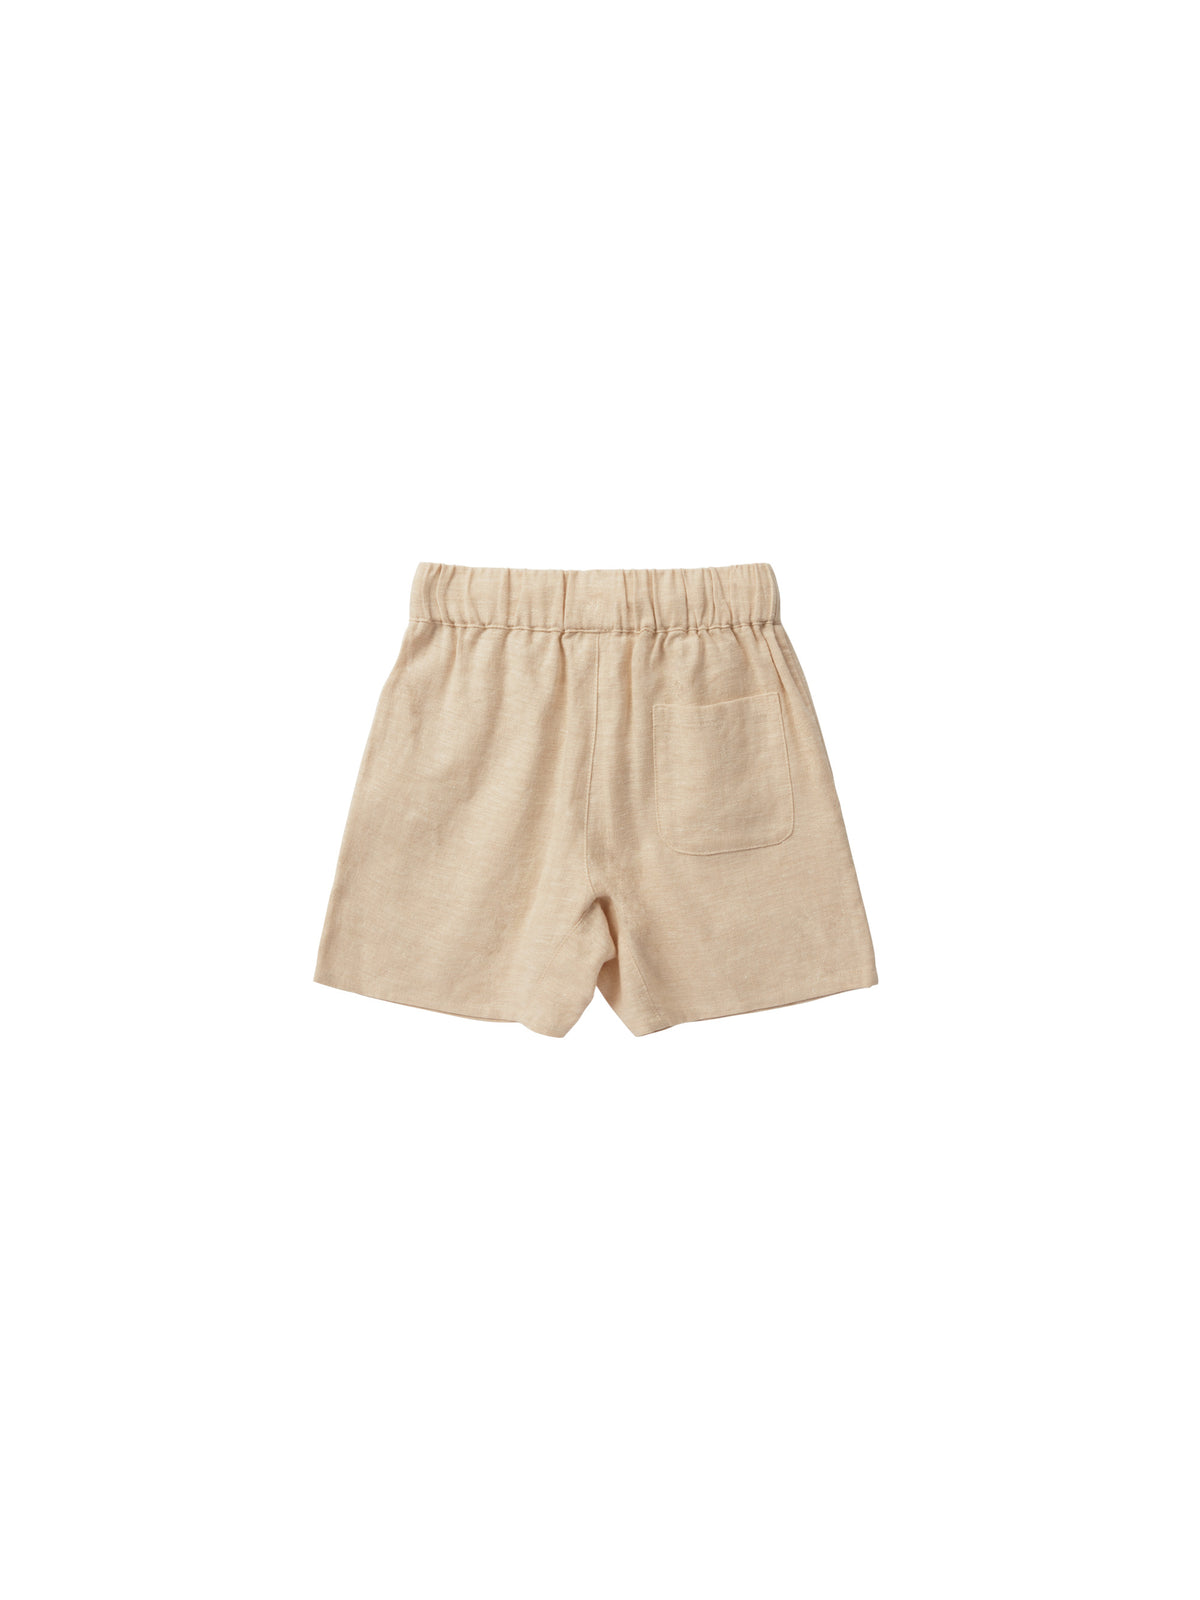 Heathered Sand Bermuda Shorts